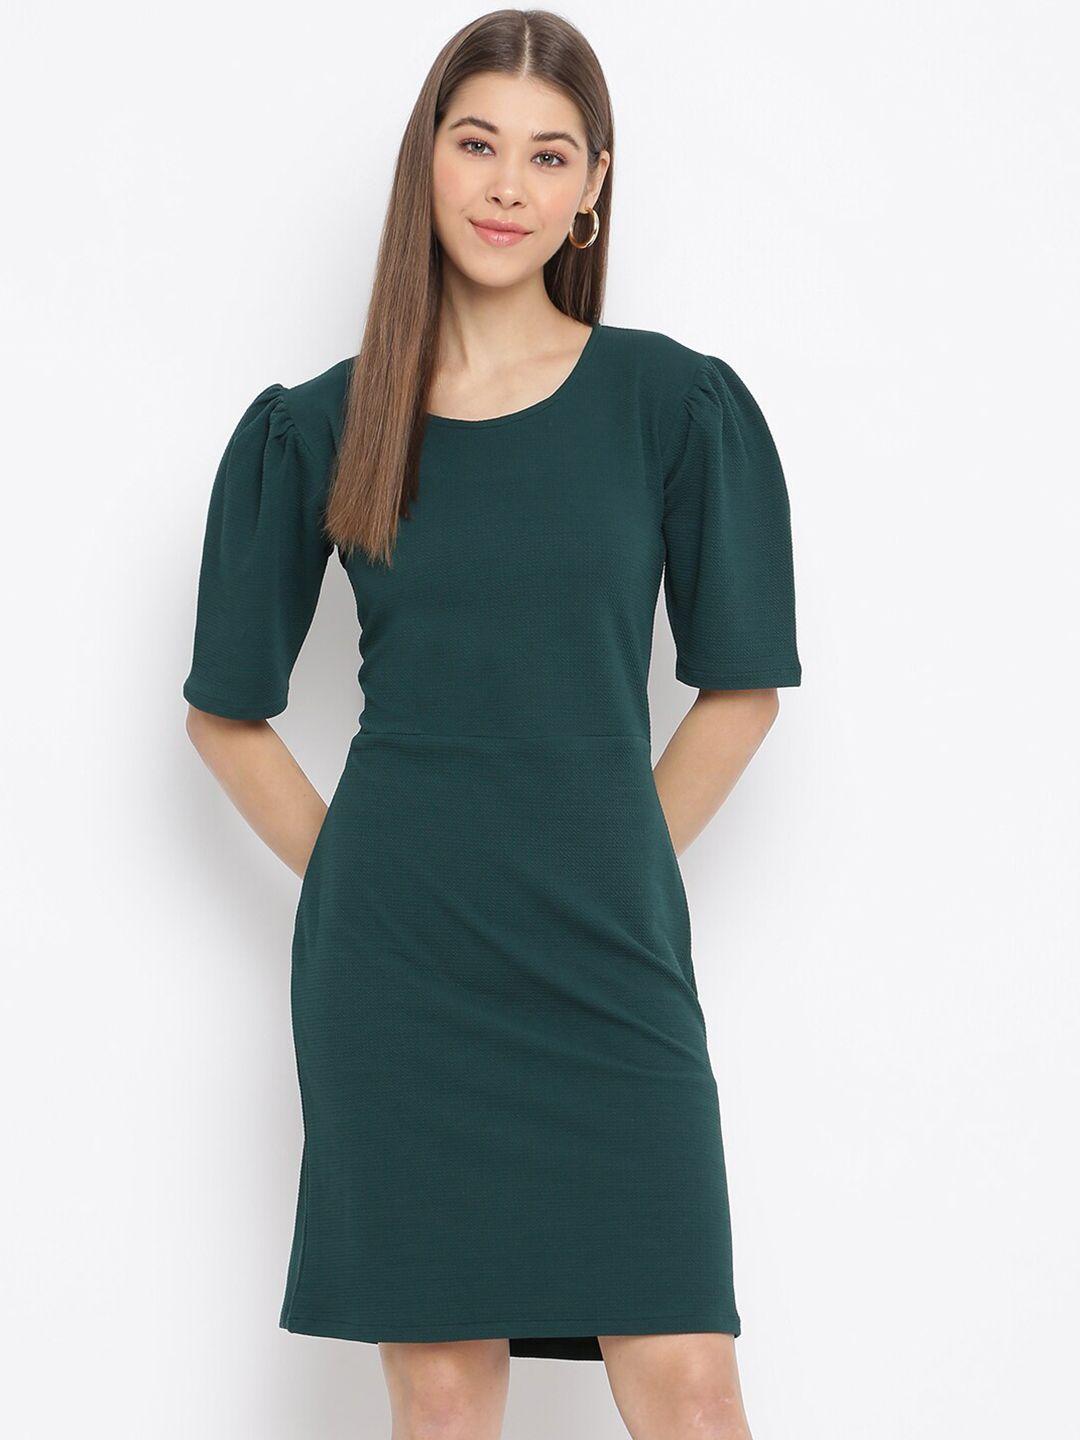 mayra green sheath dress